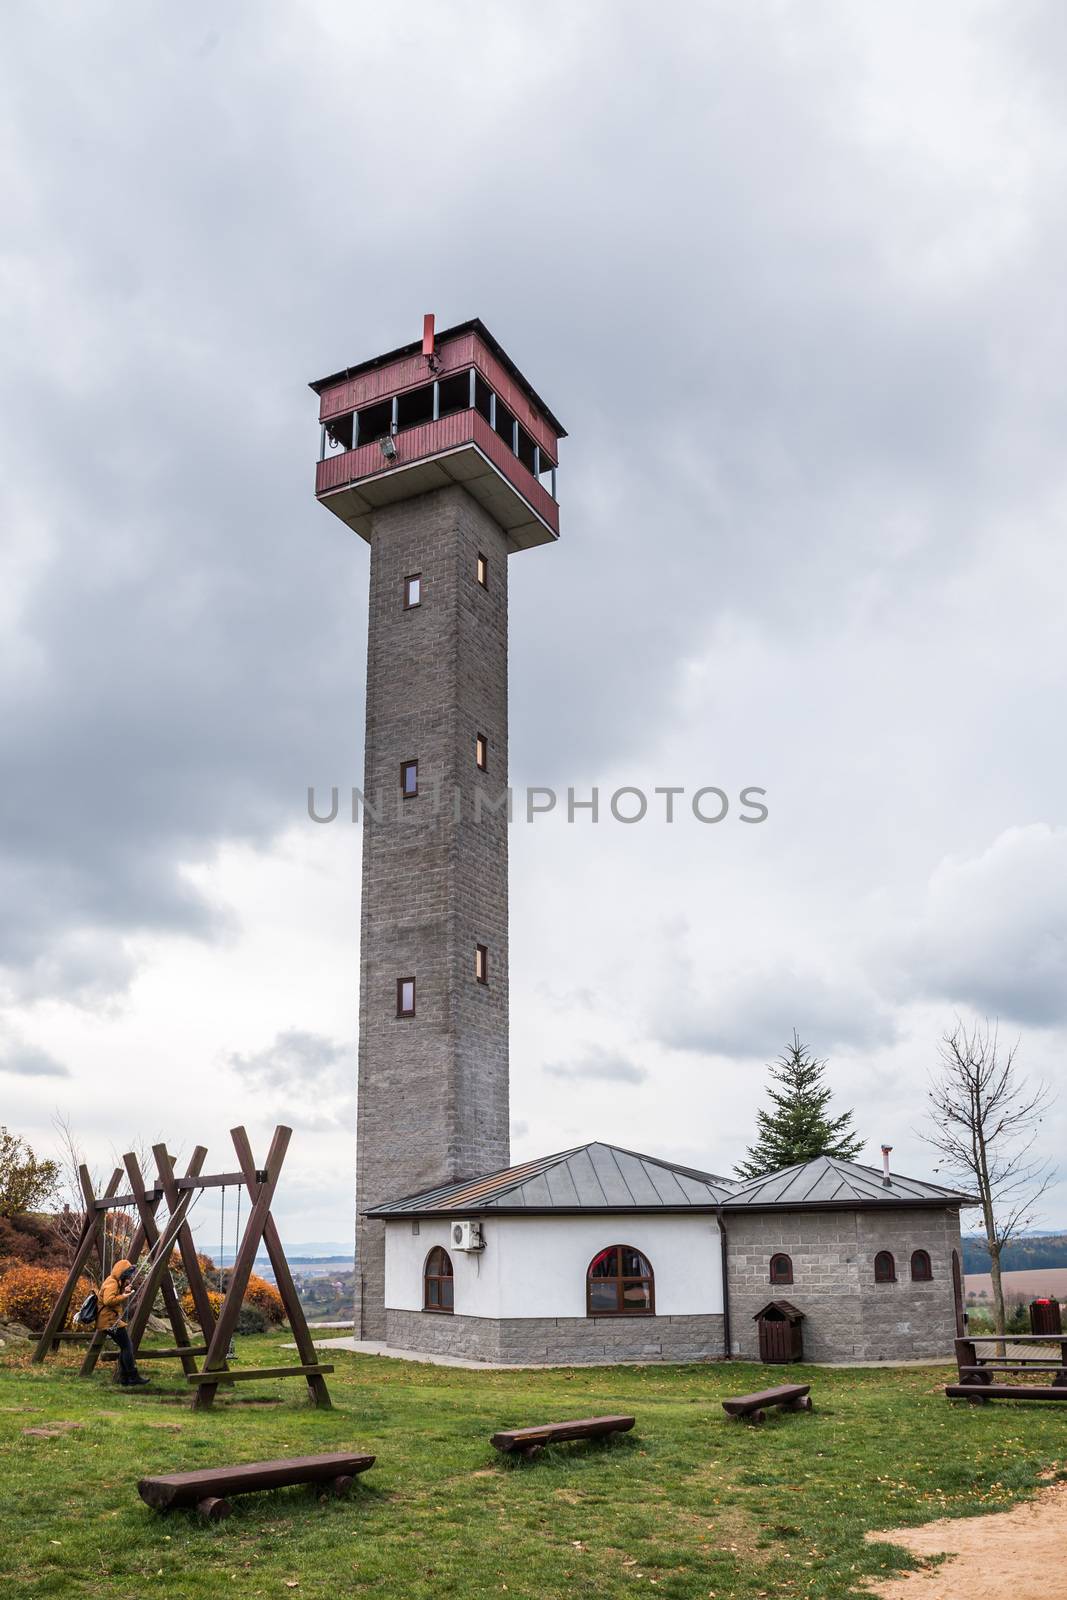 Lookout tower Karasin in autumn overcast weather, Czech Republic by petrsvoboda91